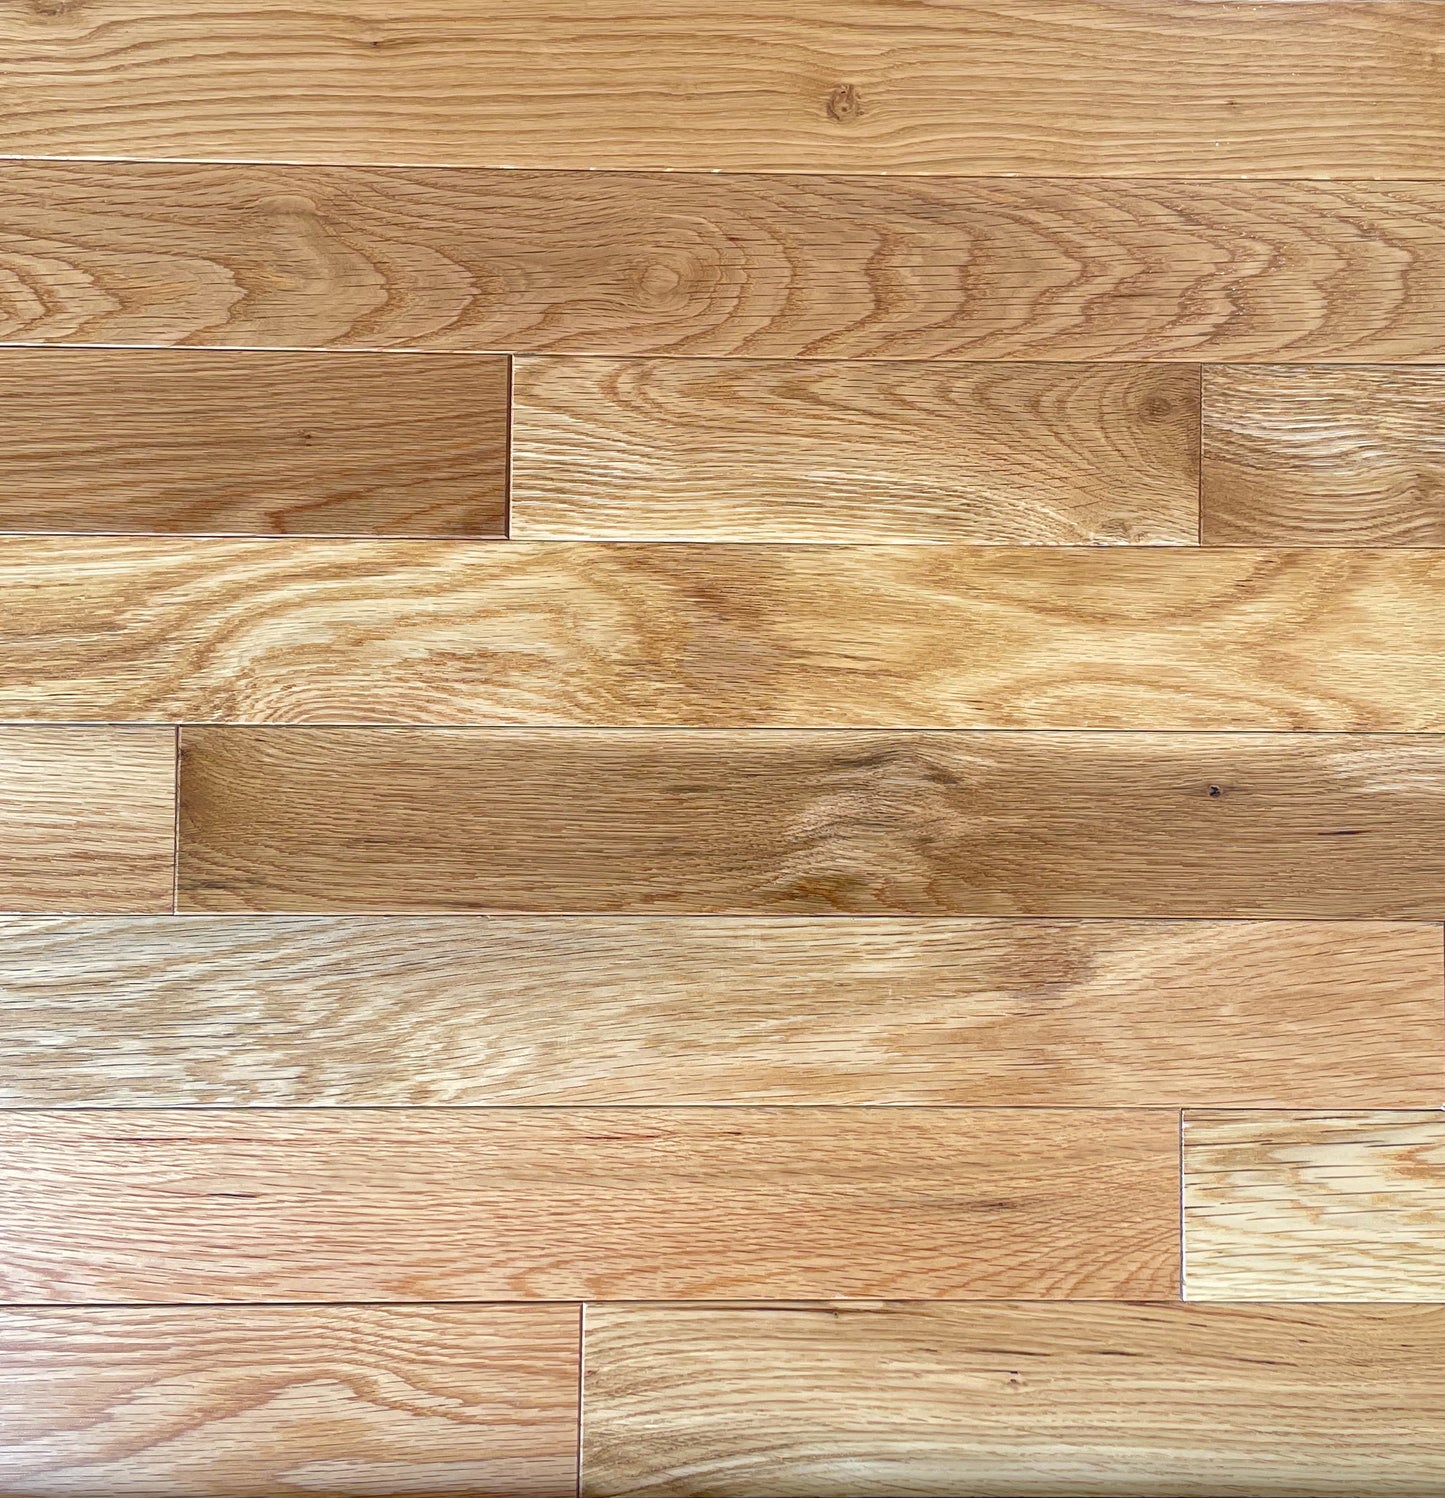 3 1/4 x 3/4" Solid White Oak Natural Stain Prefinished Hardwood Flooring